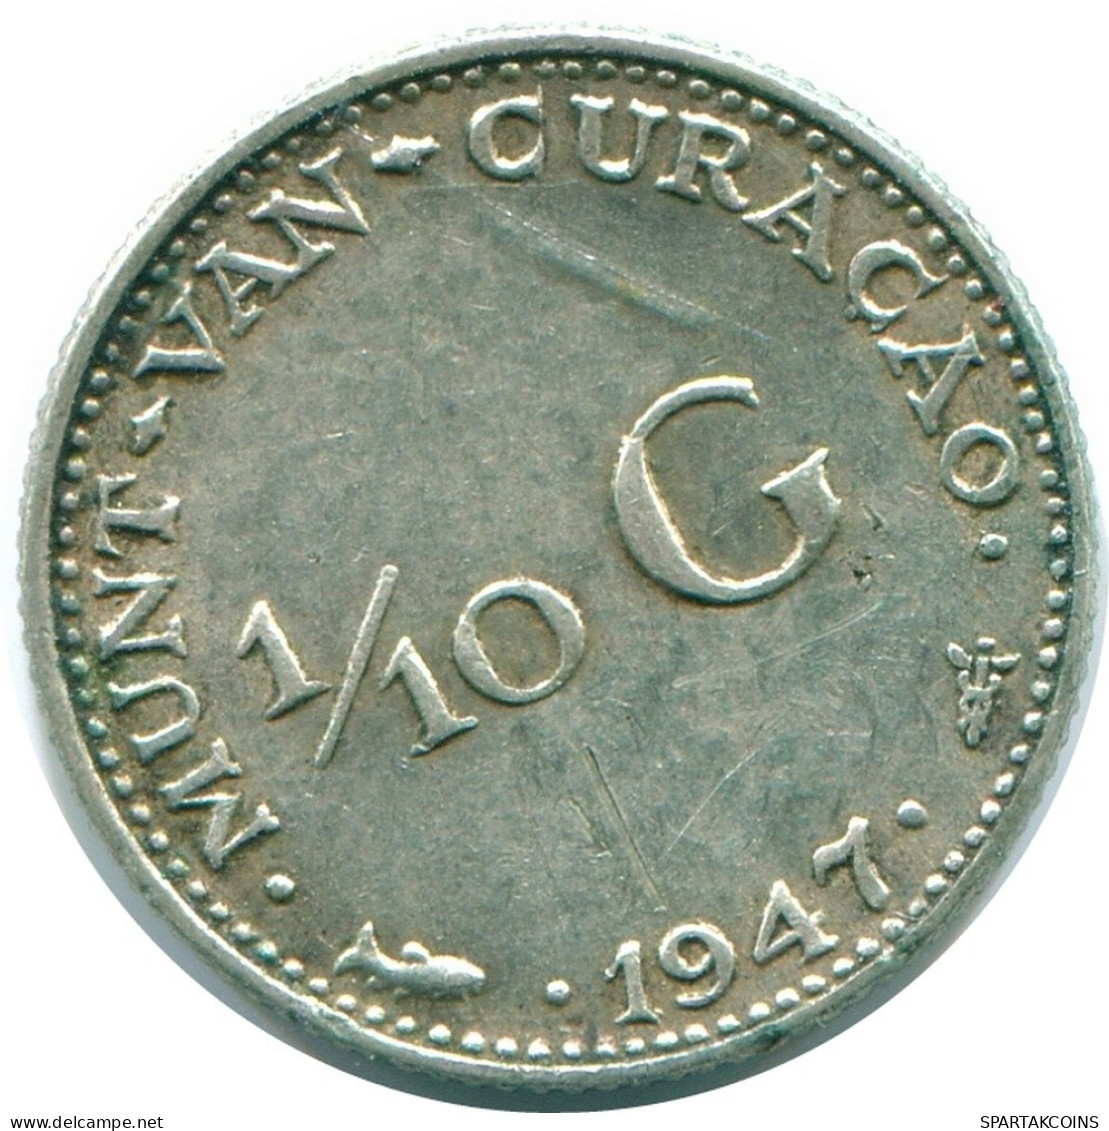 1/10 GULDEN 1947 CURACAO Netherlands SILVER Colonial Coin #NL11863.3.U.A - Curaçao